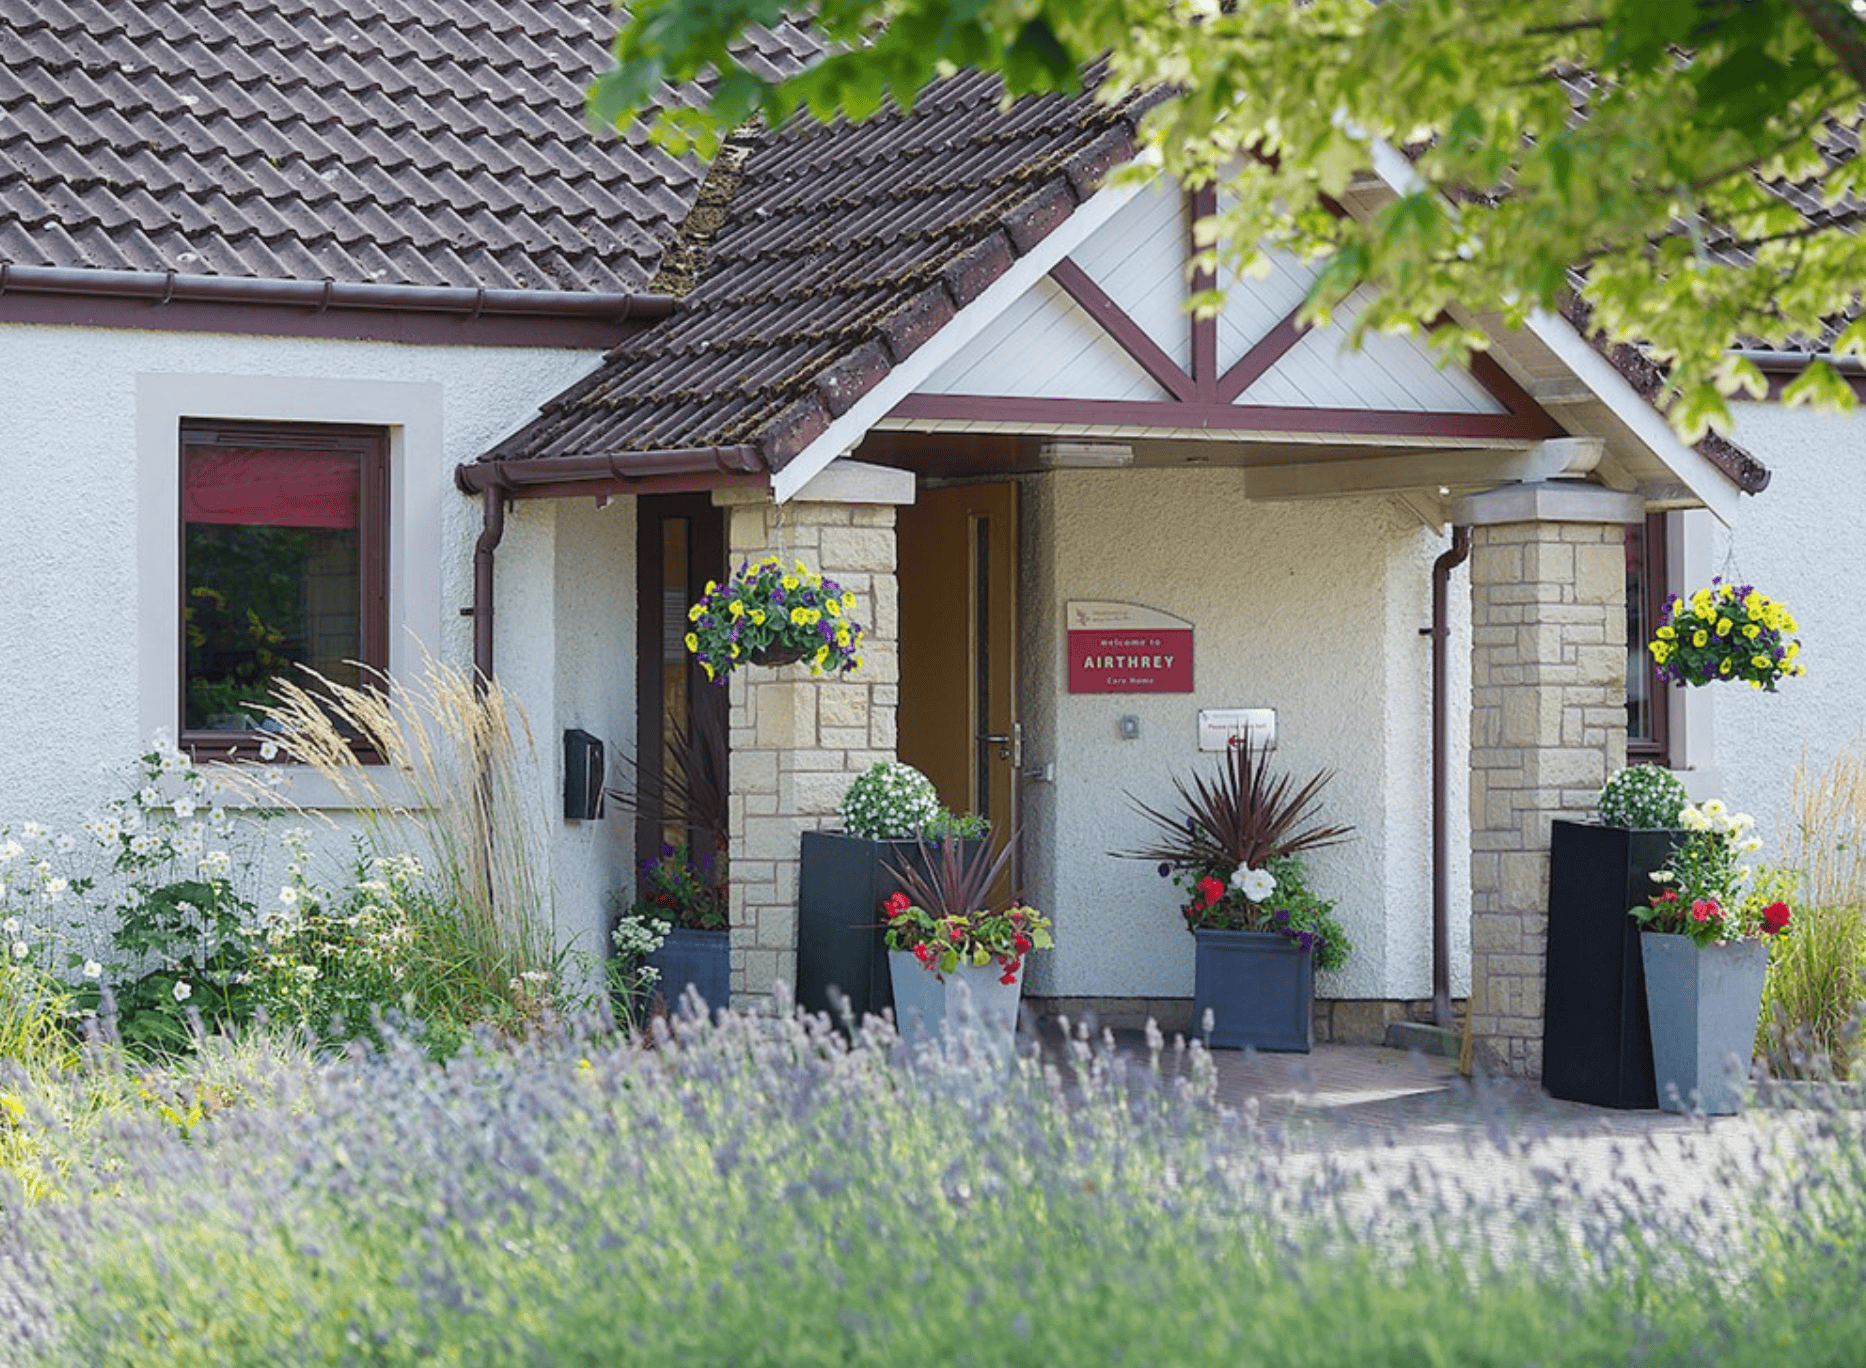 Exterior at Airthrey Care Home, Airth, Falkirk